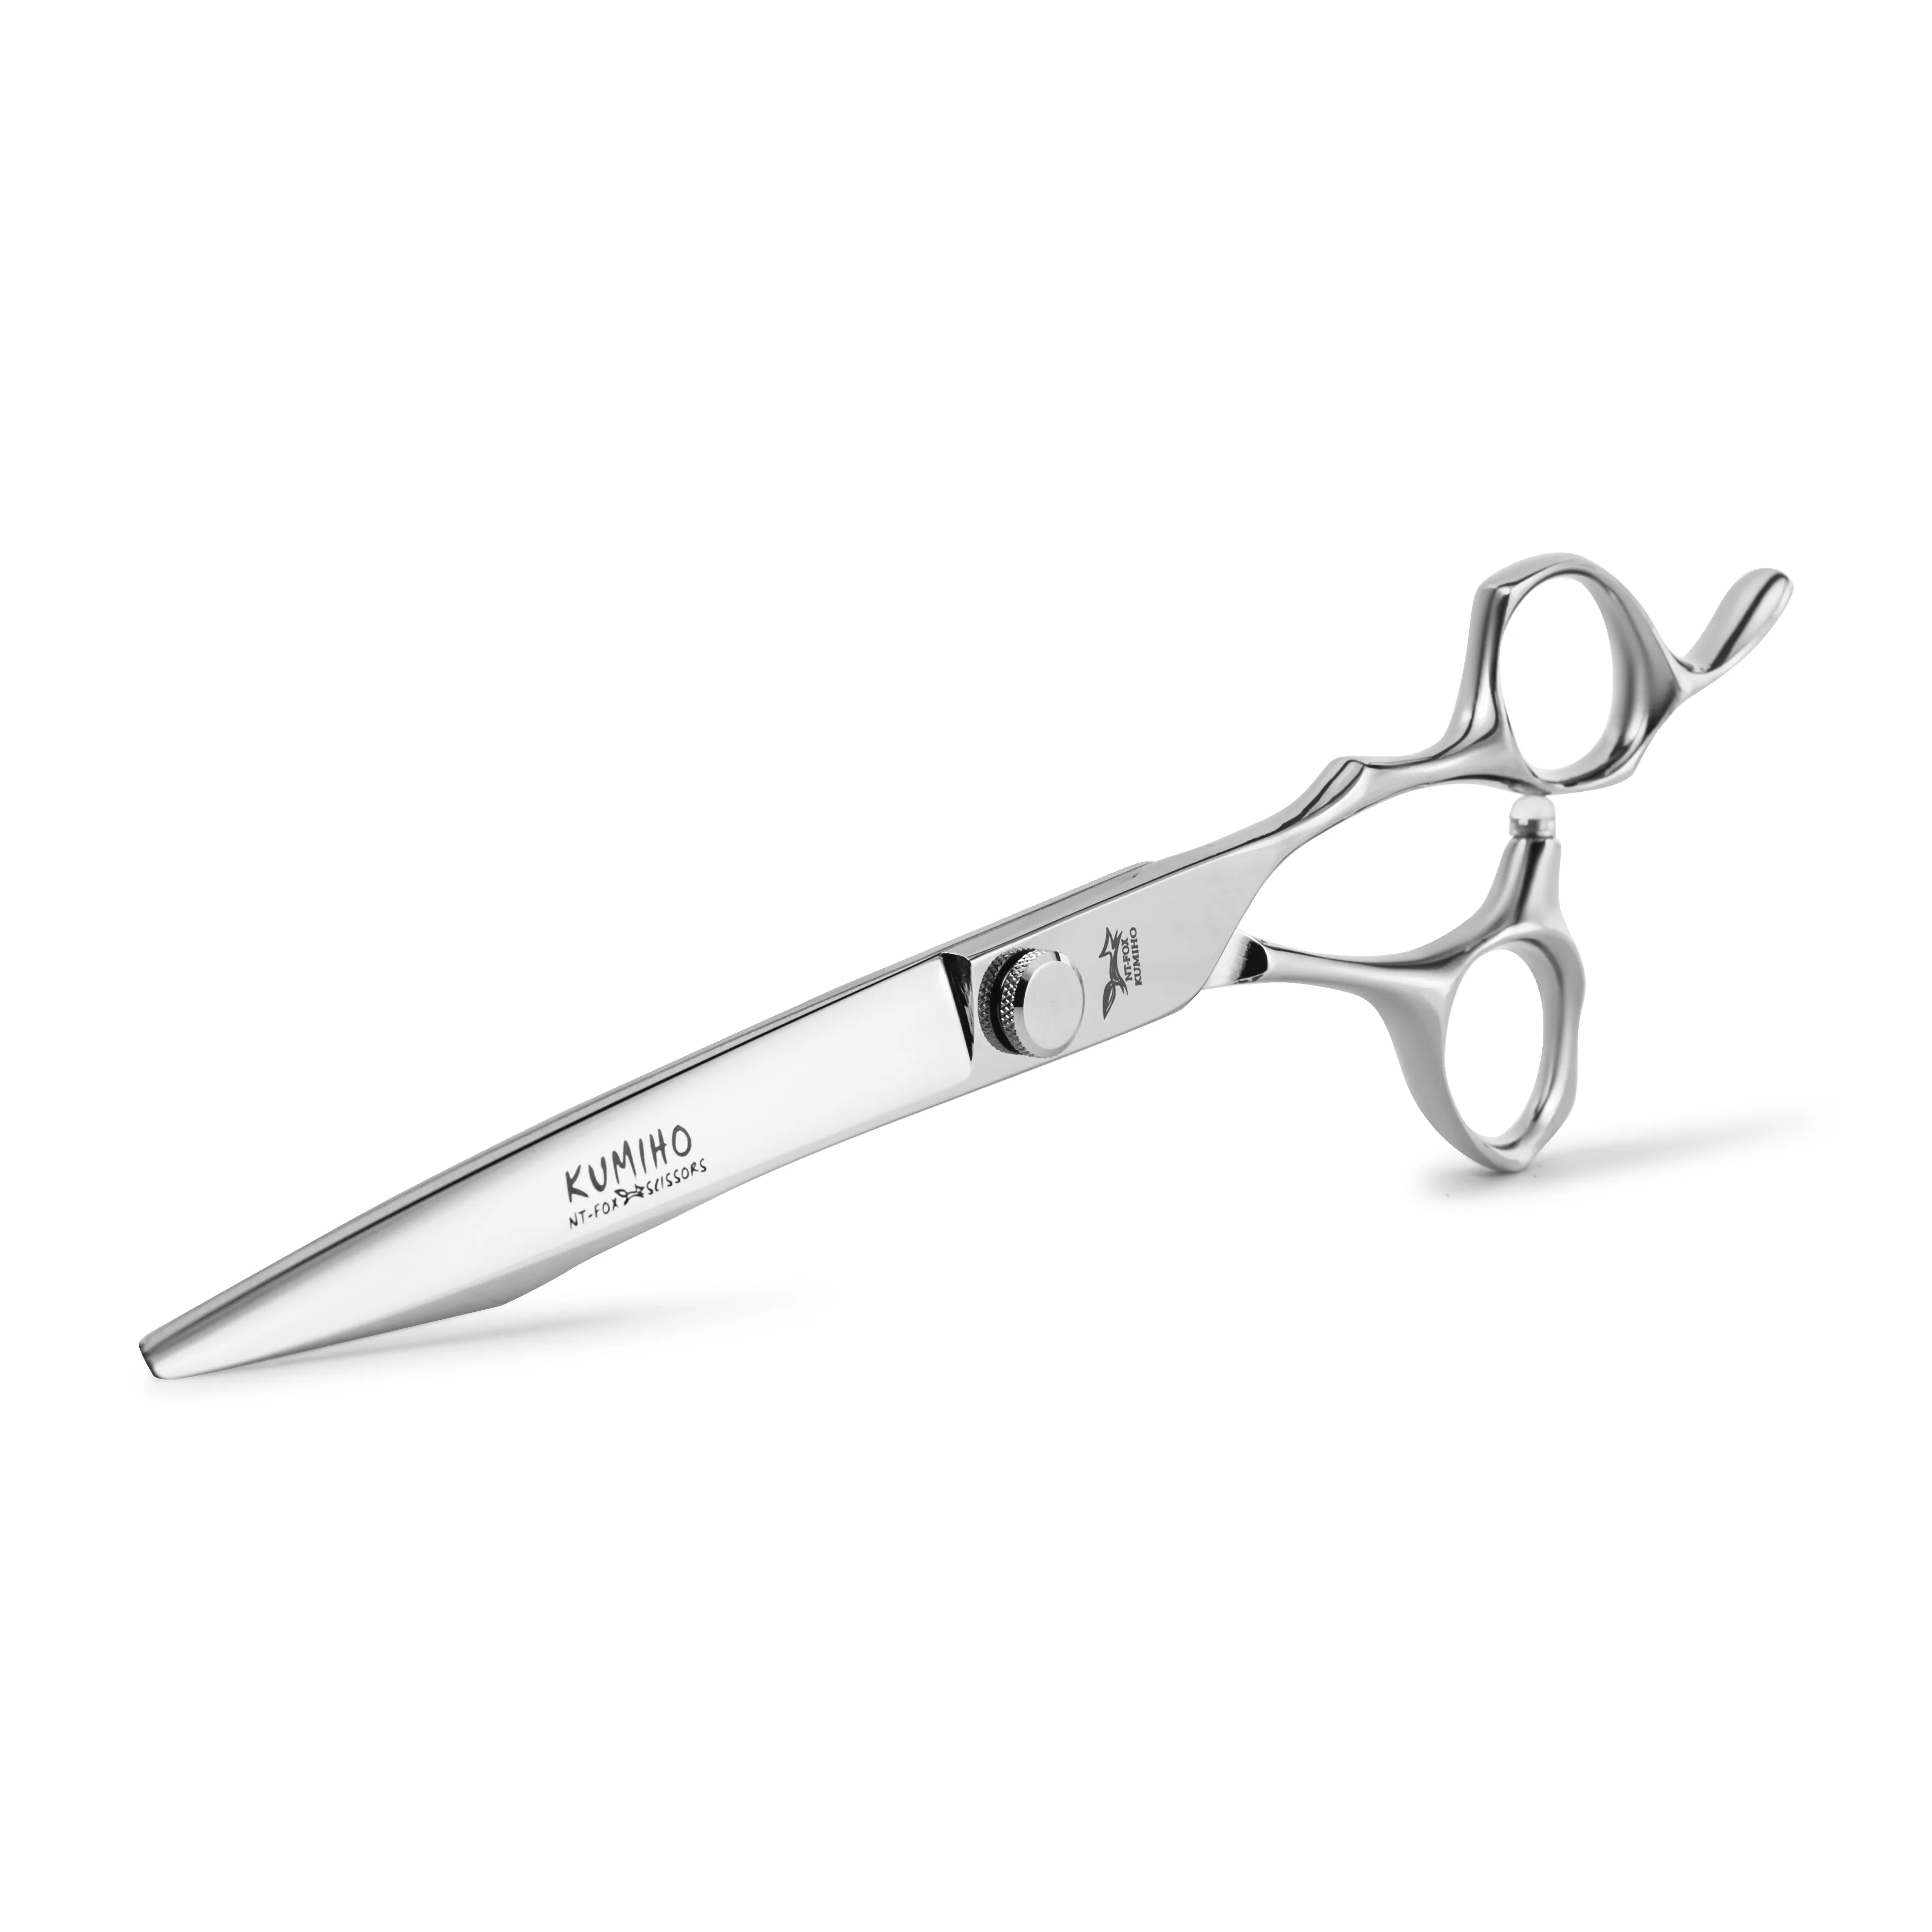 hot sale dog scissors/ pet grooming shears 7.0-9.5 inch dog hair cutting scissors